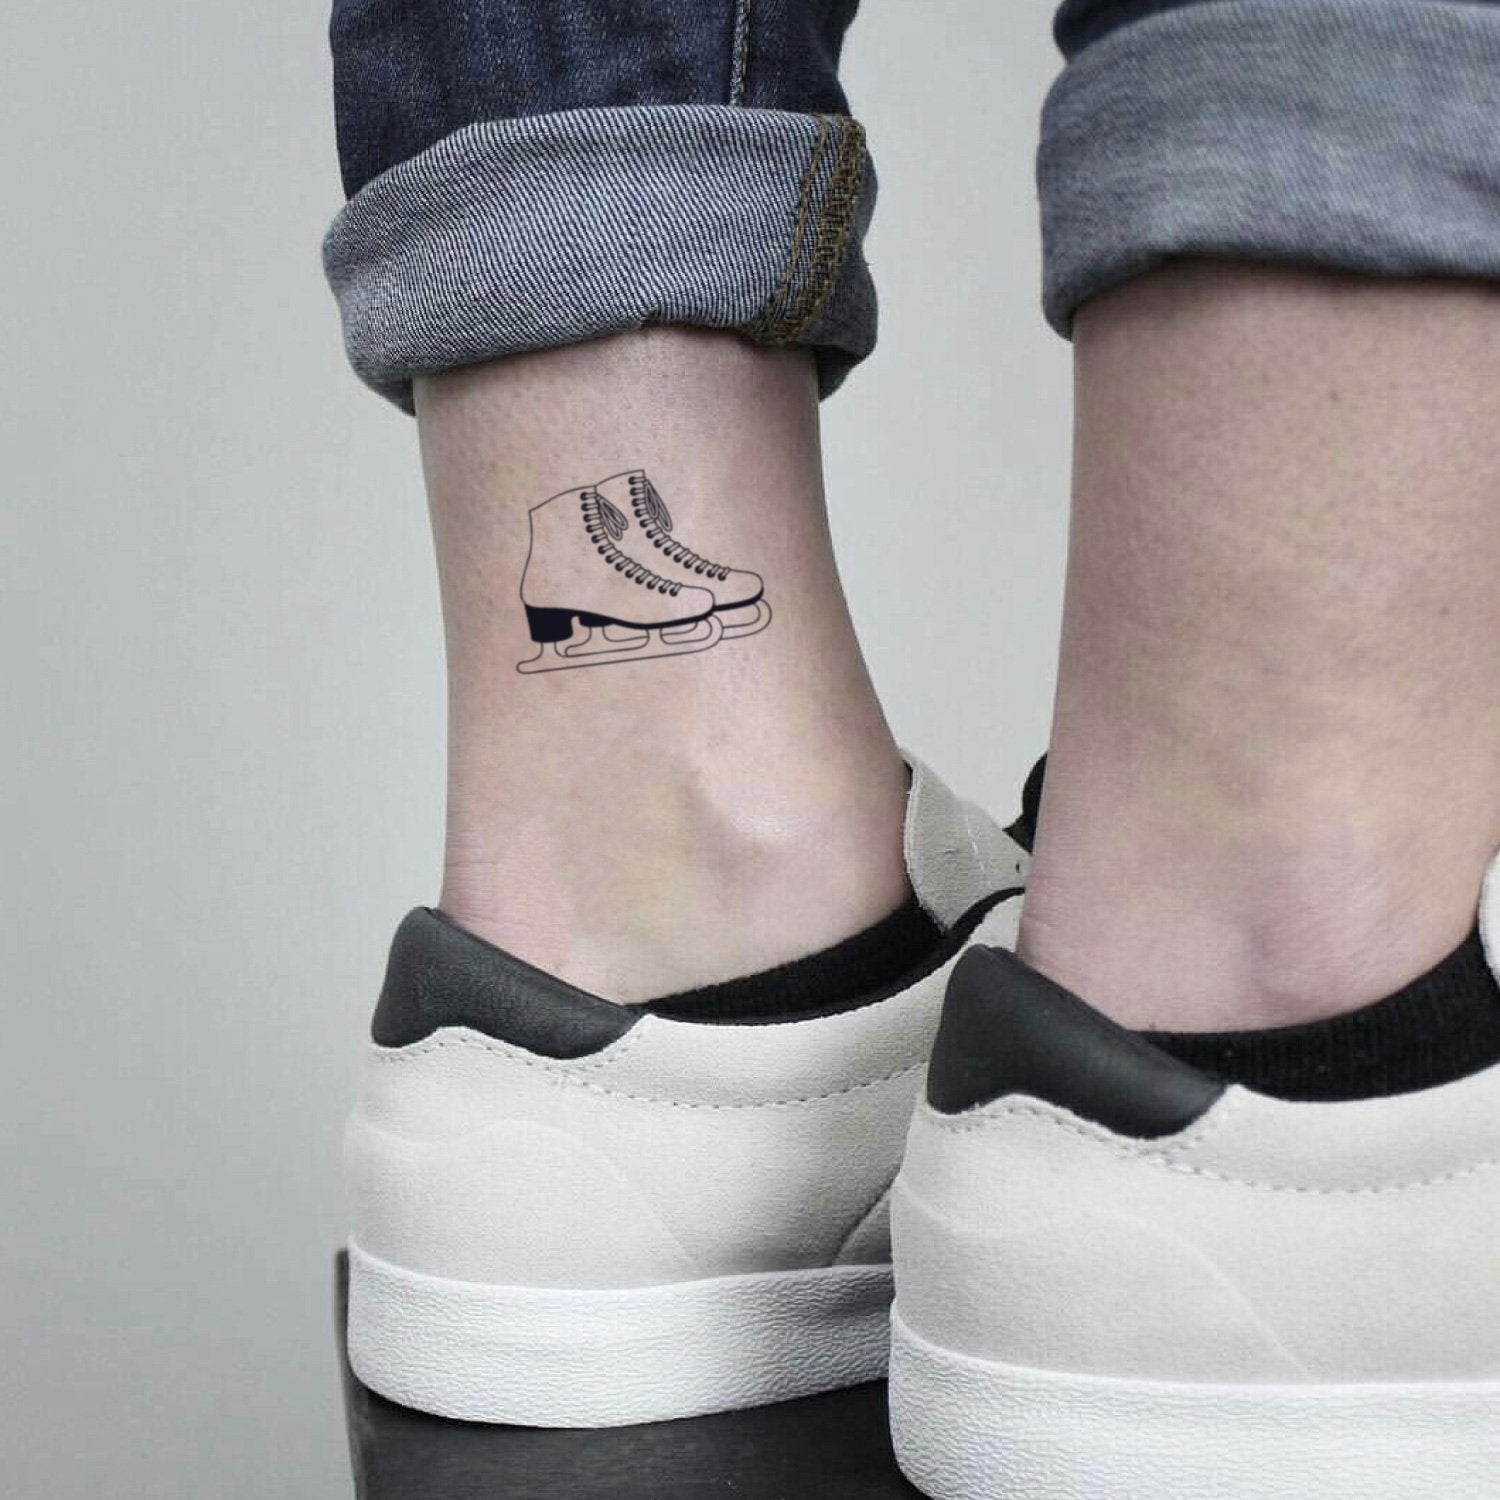 fake small figure skating illustrative temporary tattoo sticker design idea on ankle